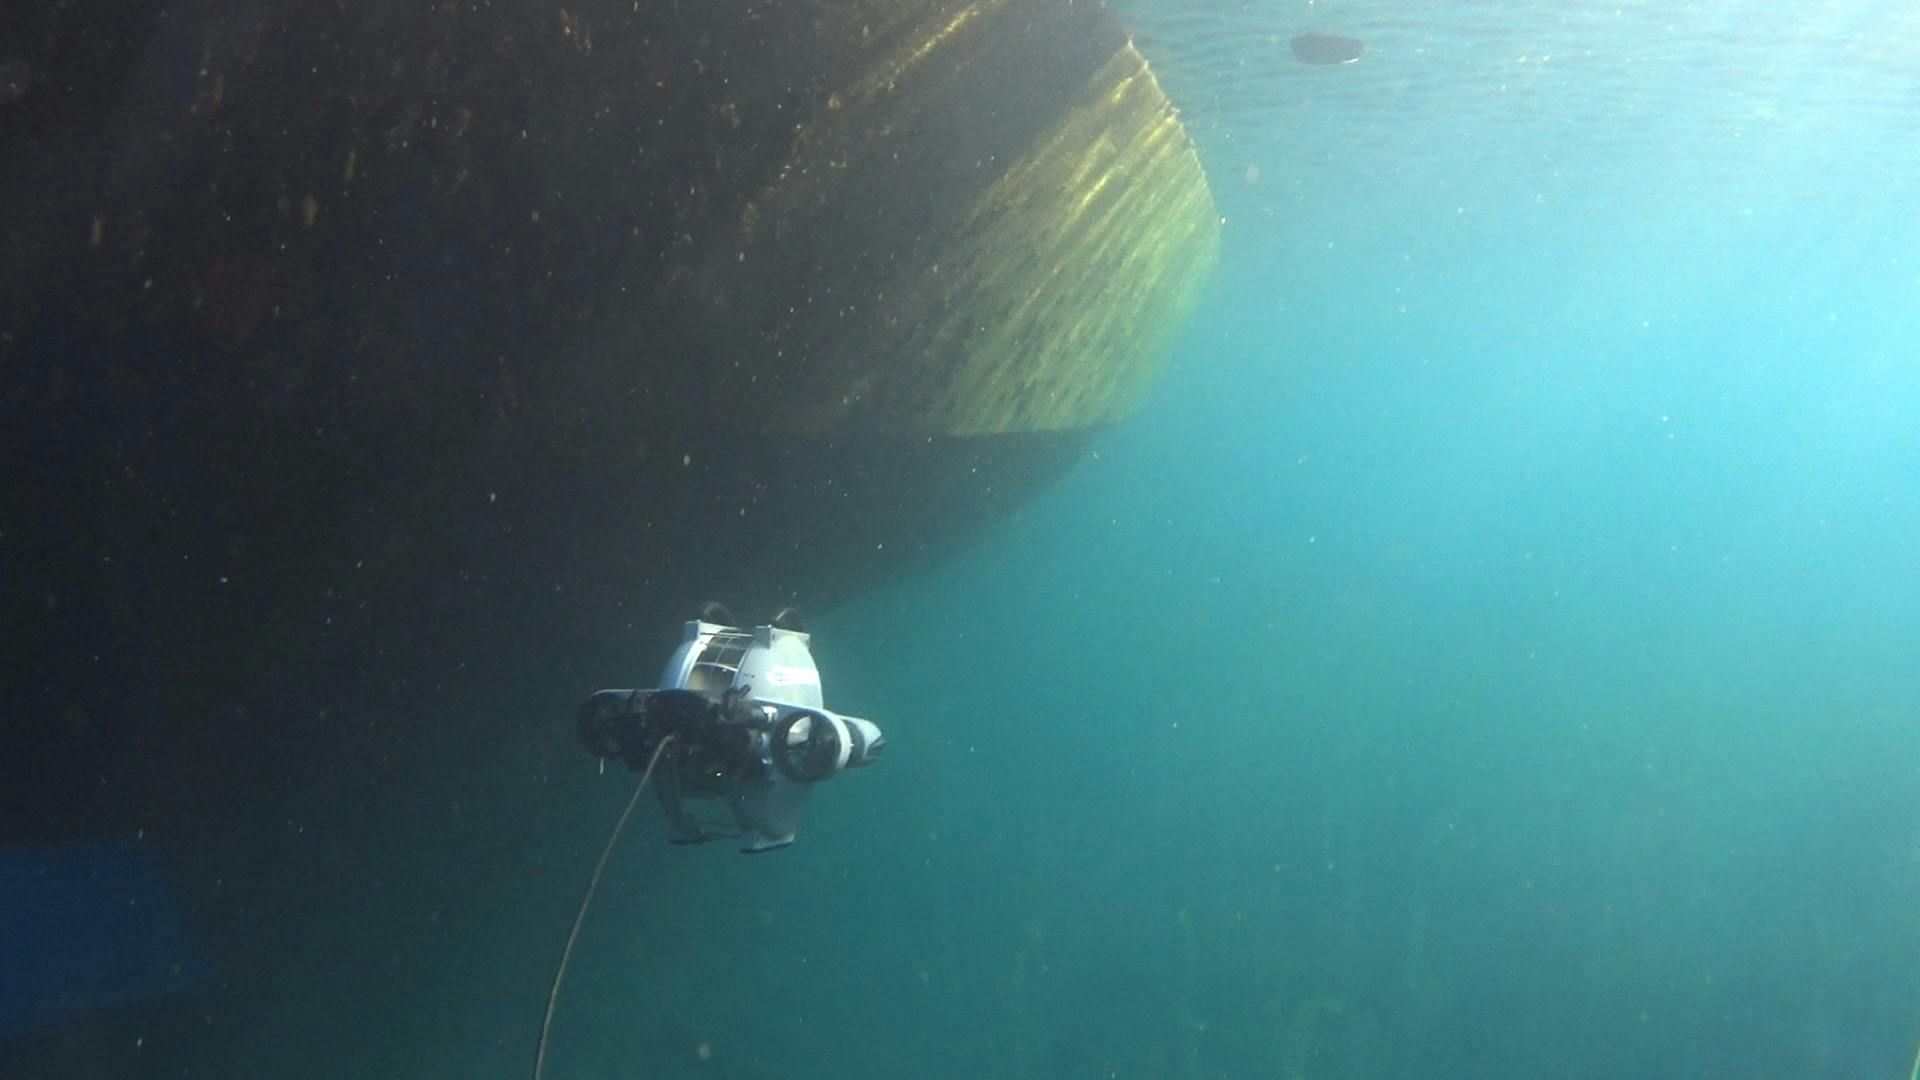 Deep Trekker DTG3 underwater ROV swimming in the ocean towards a large grey boat propeller. 